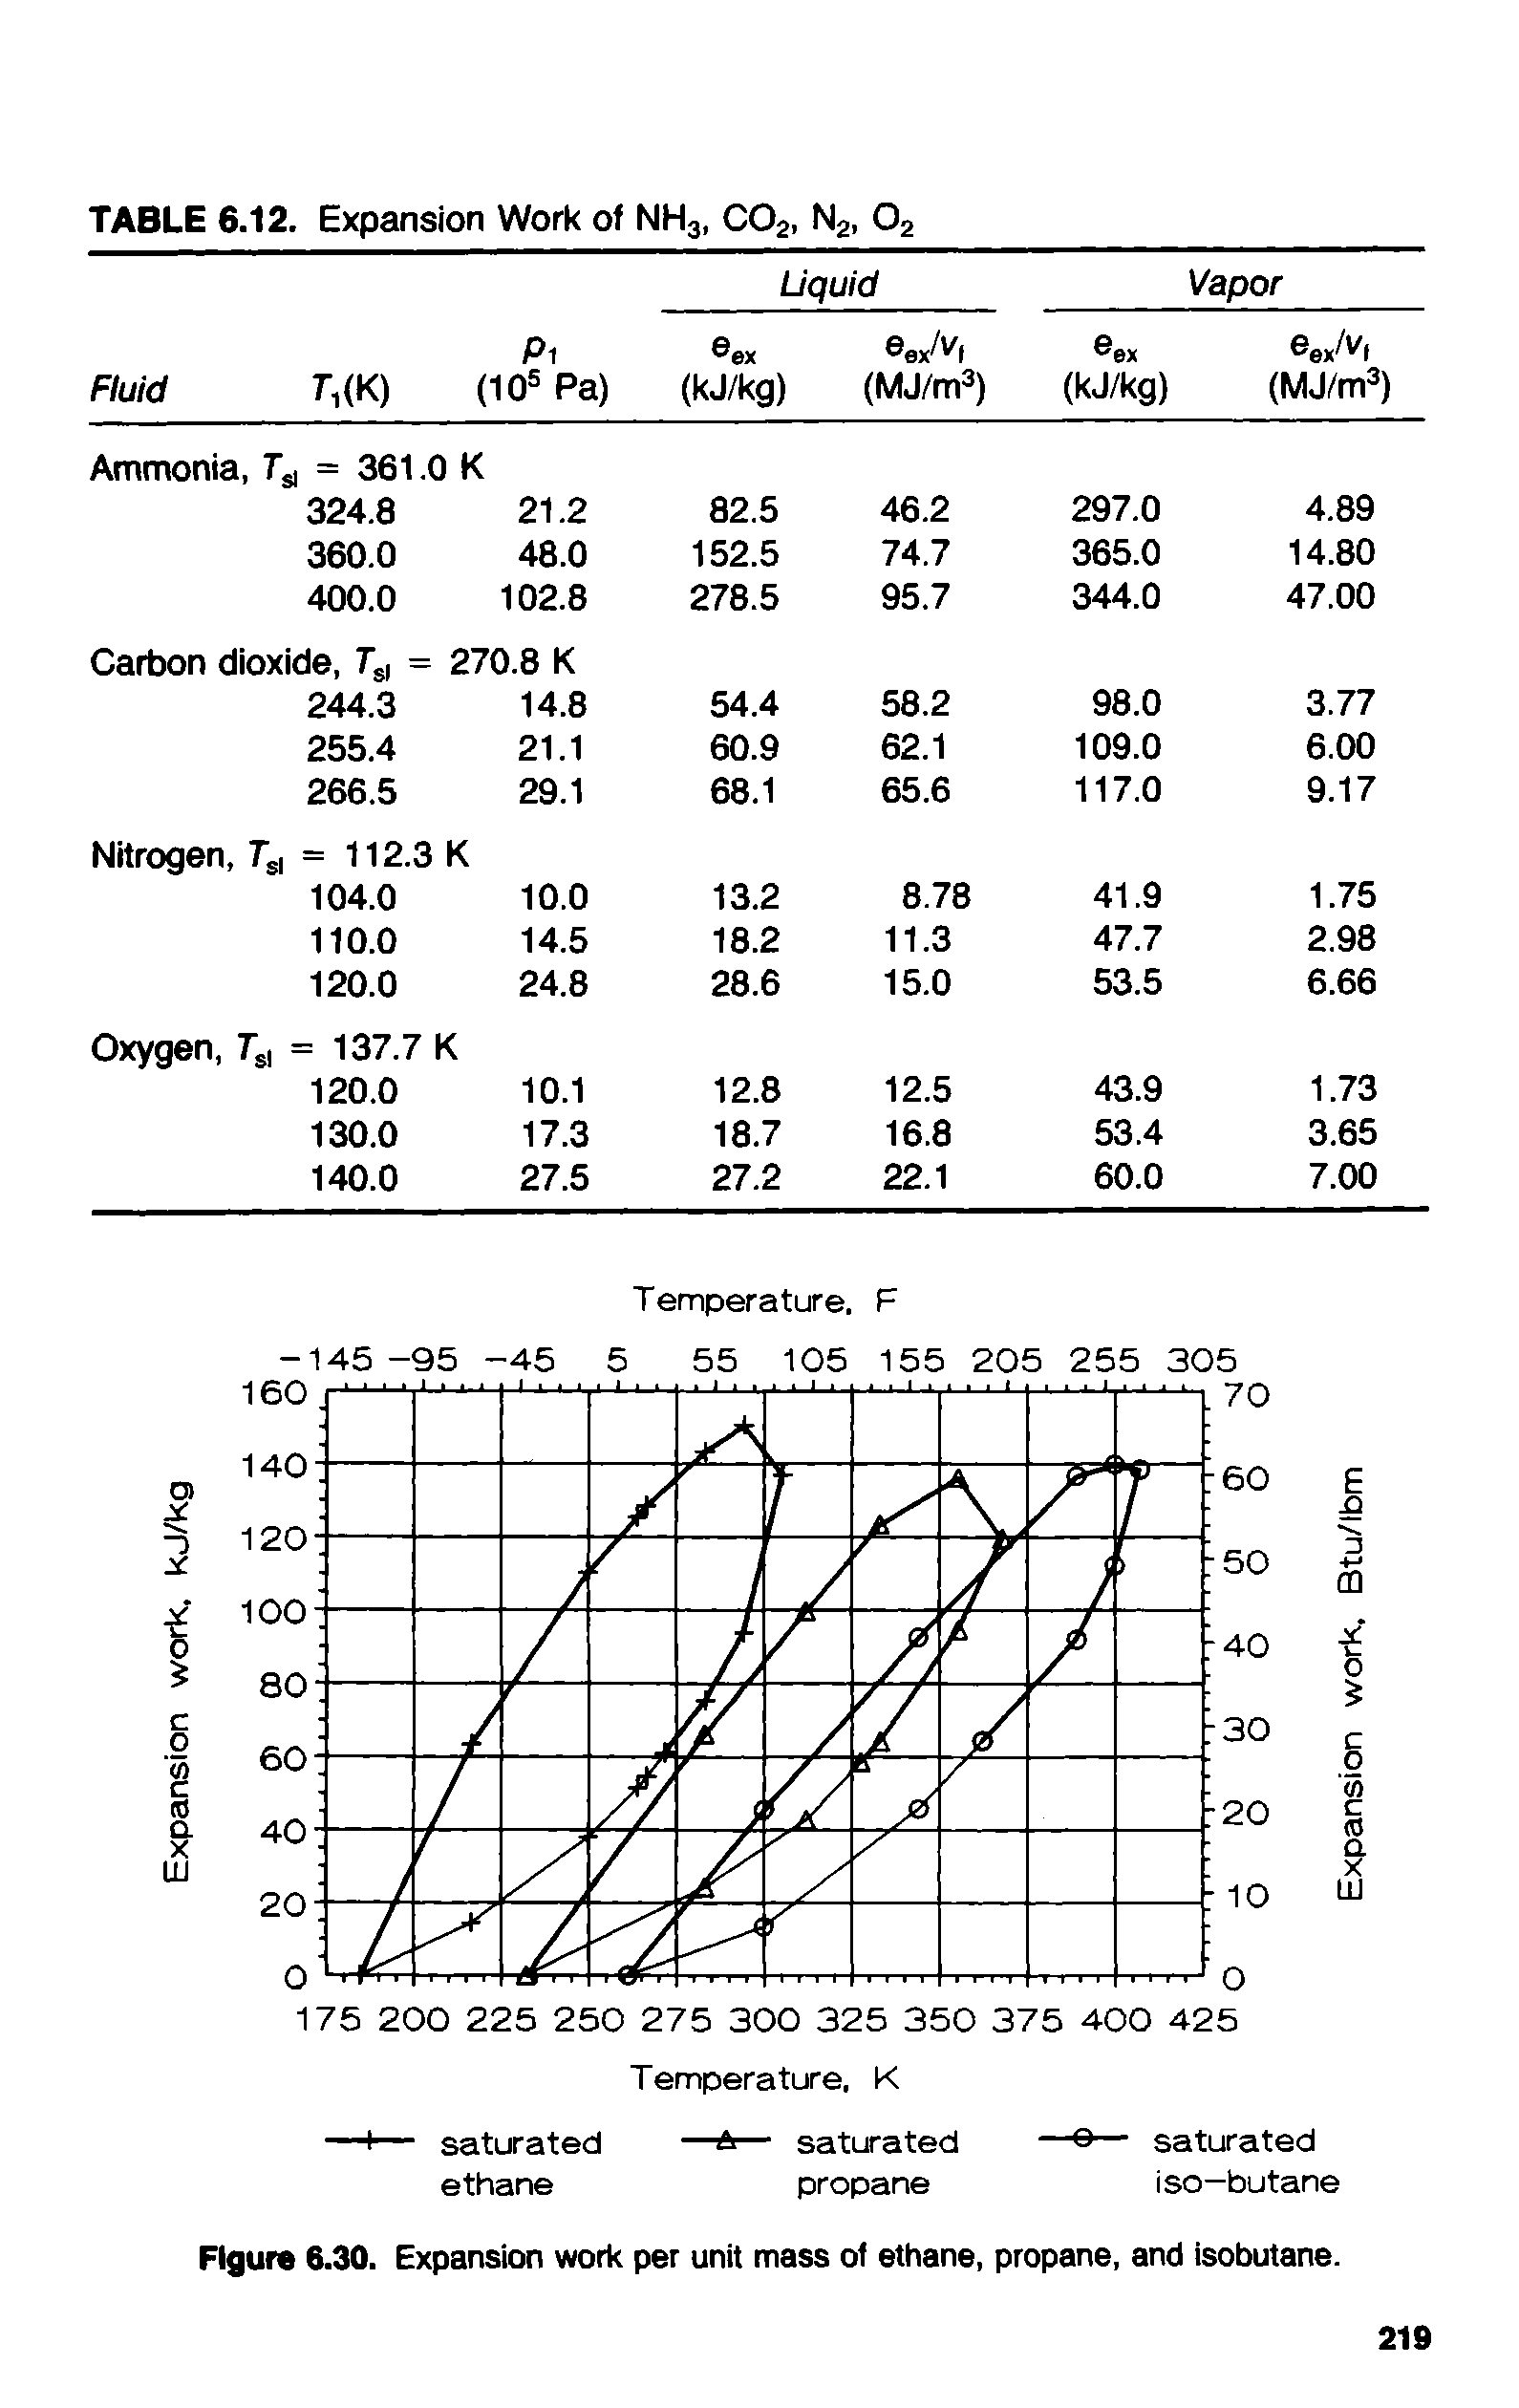 Figure 6.30. Expansion work per unit mass of ethane, propane, and isobutane.